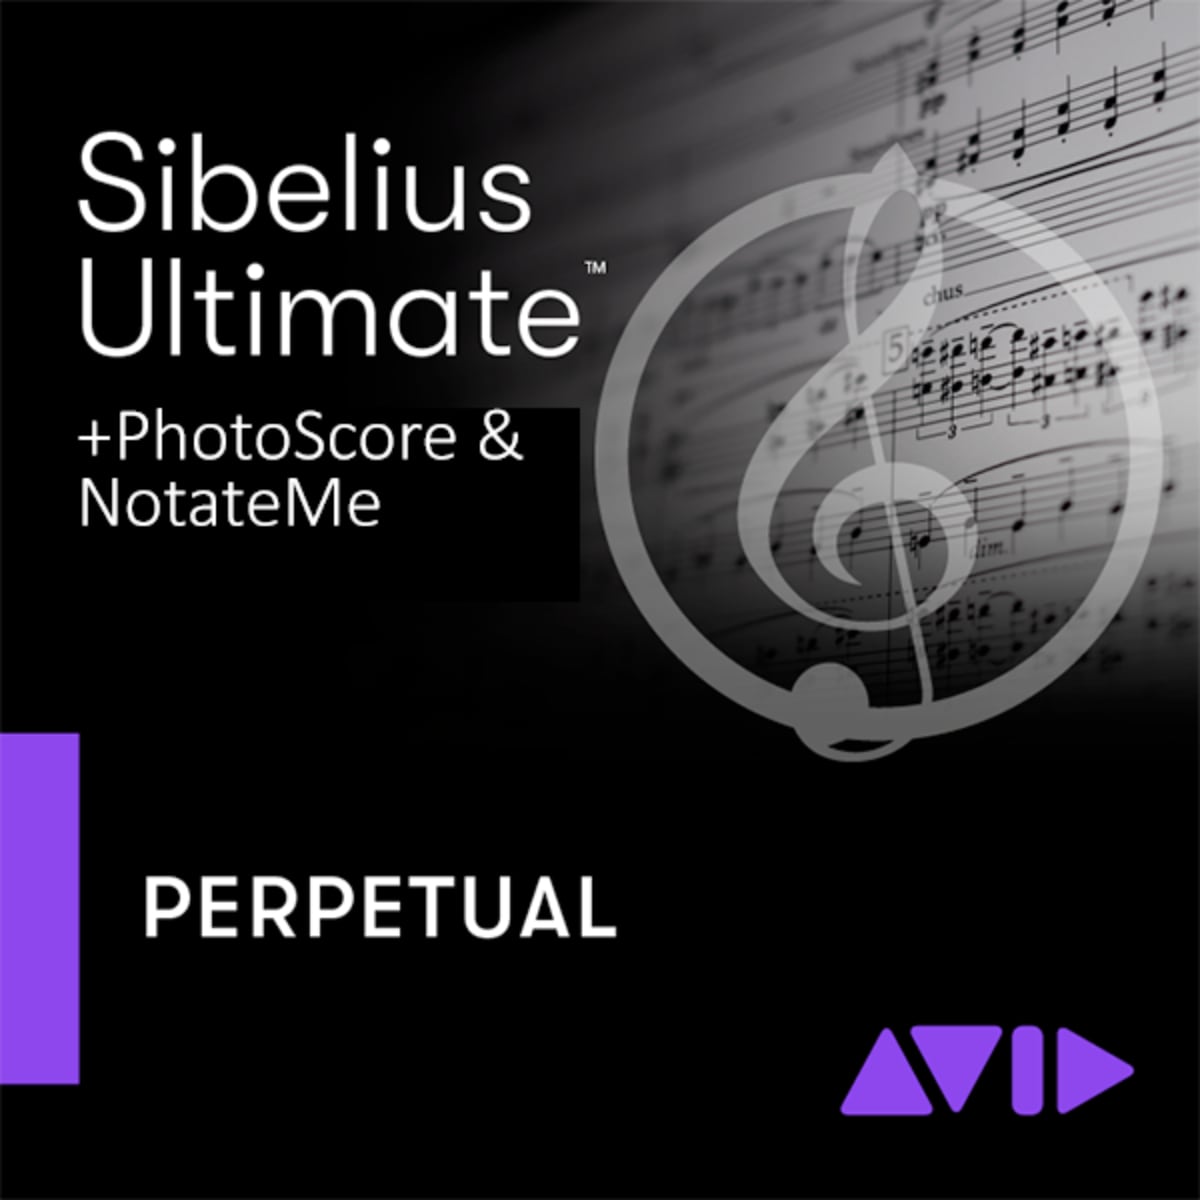 AVID Sibelius | Ultimate Perpetual License NEW + PhotoScore and NotateMe Ultimate